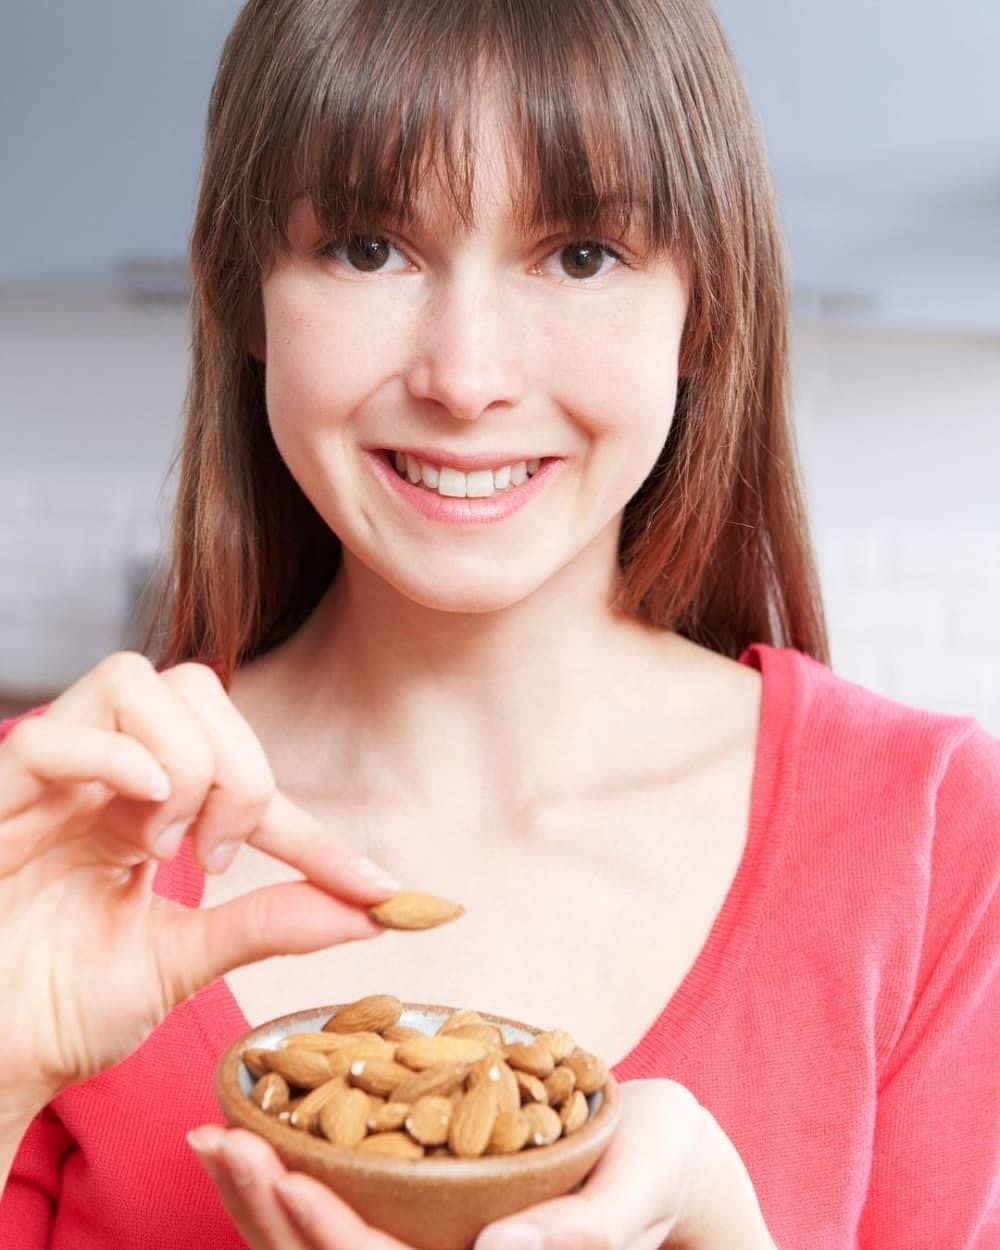 रोज सुबह बादाम खाने के फायदे | Benefits of Eating Almonds in Hindi